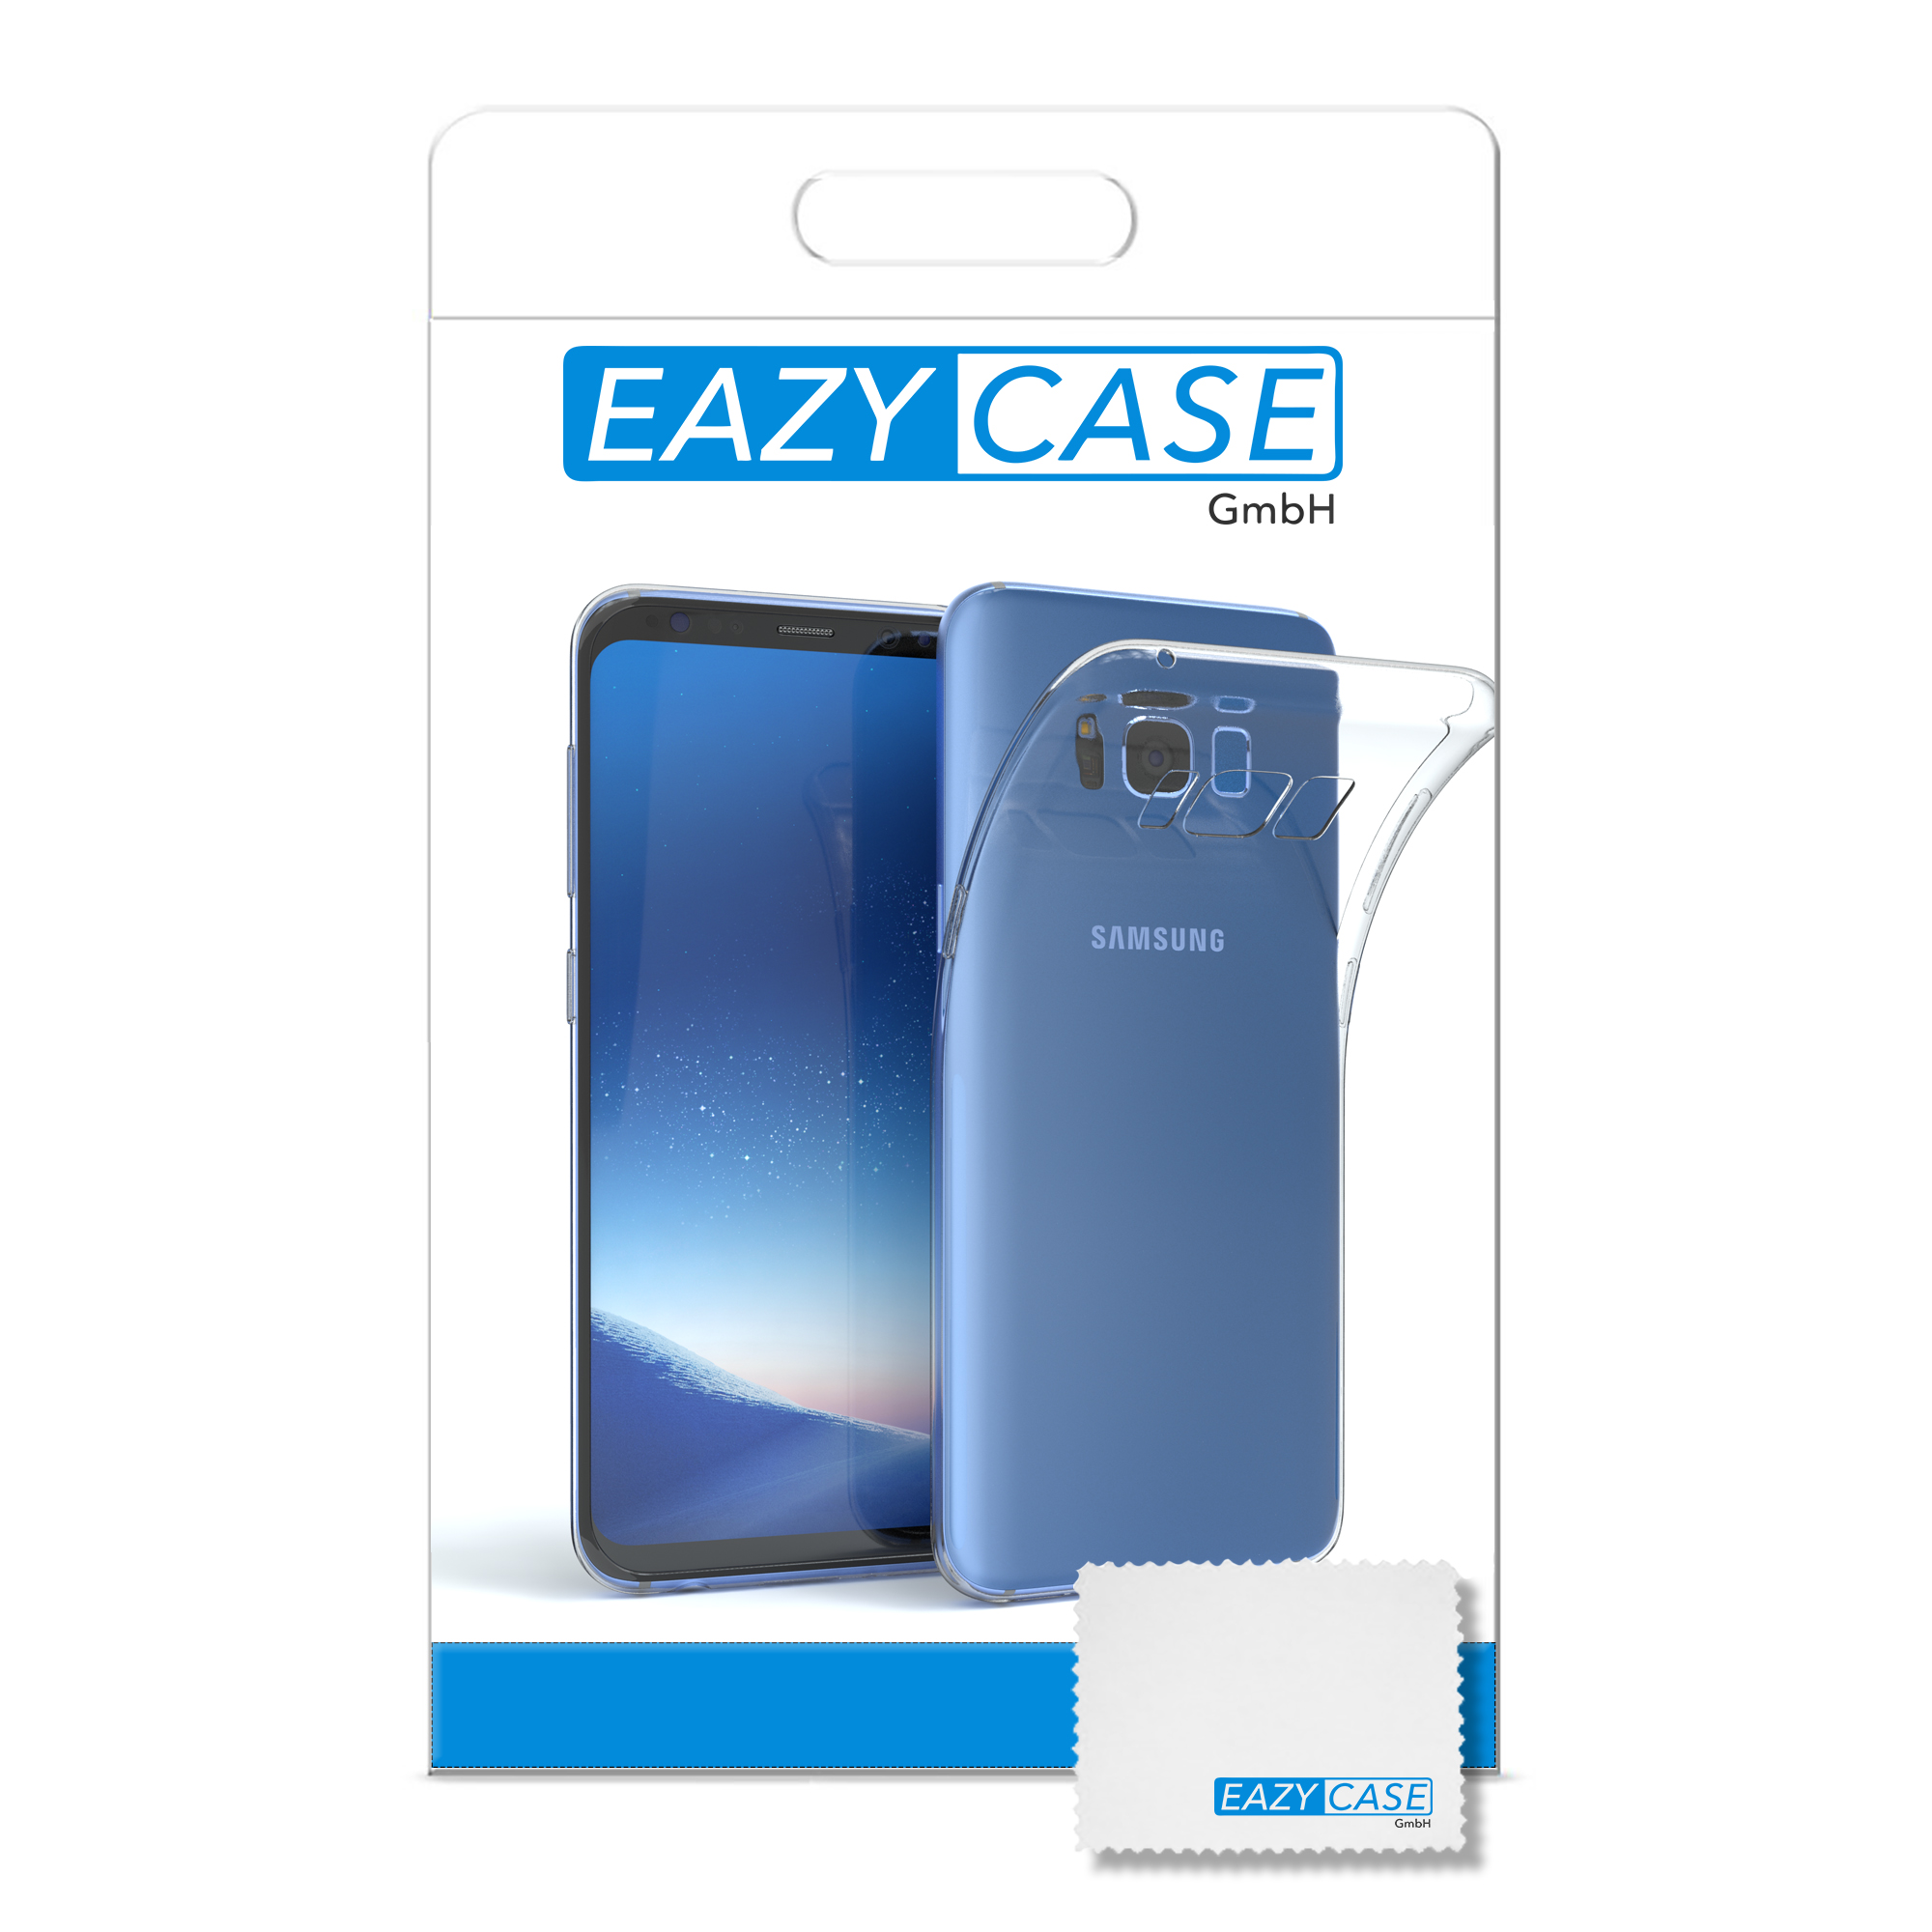 EAZY CASE Slimcover Clear, Backcover, S8, Durchsichtig Galaxy Samsung